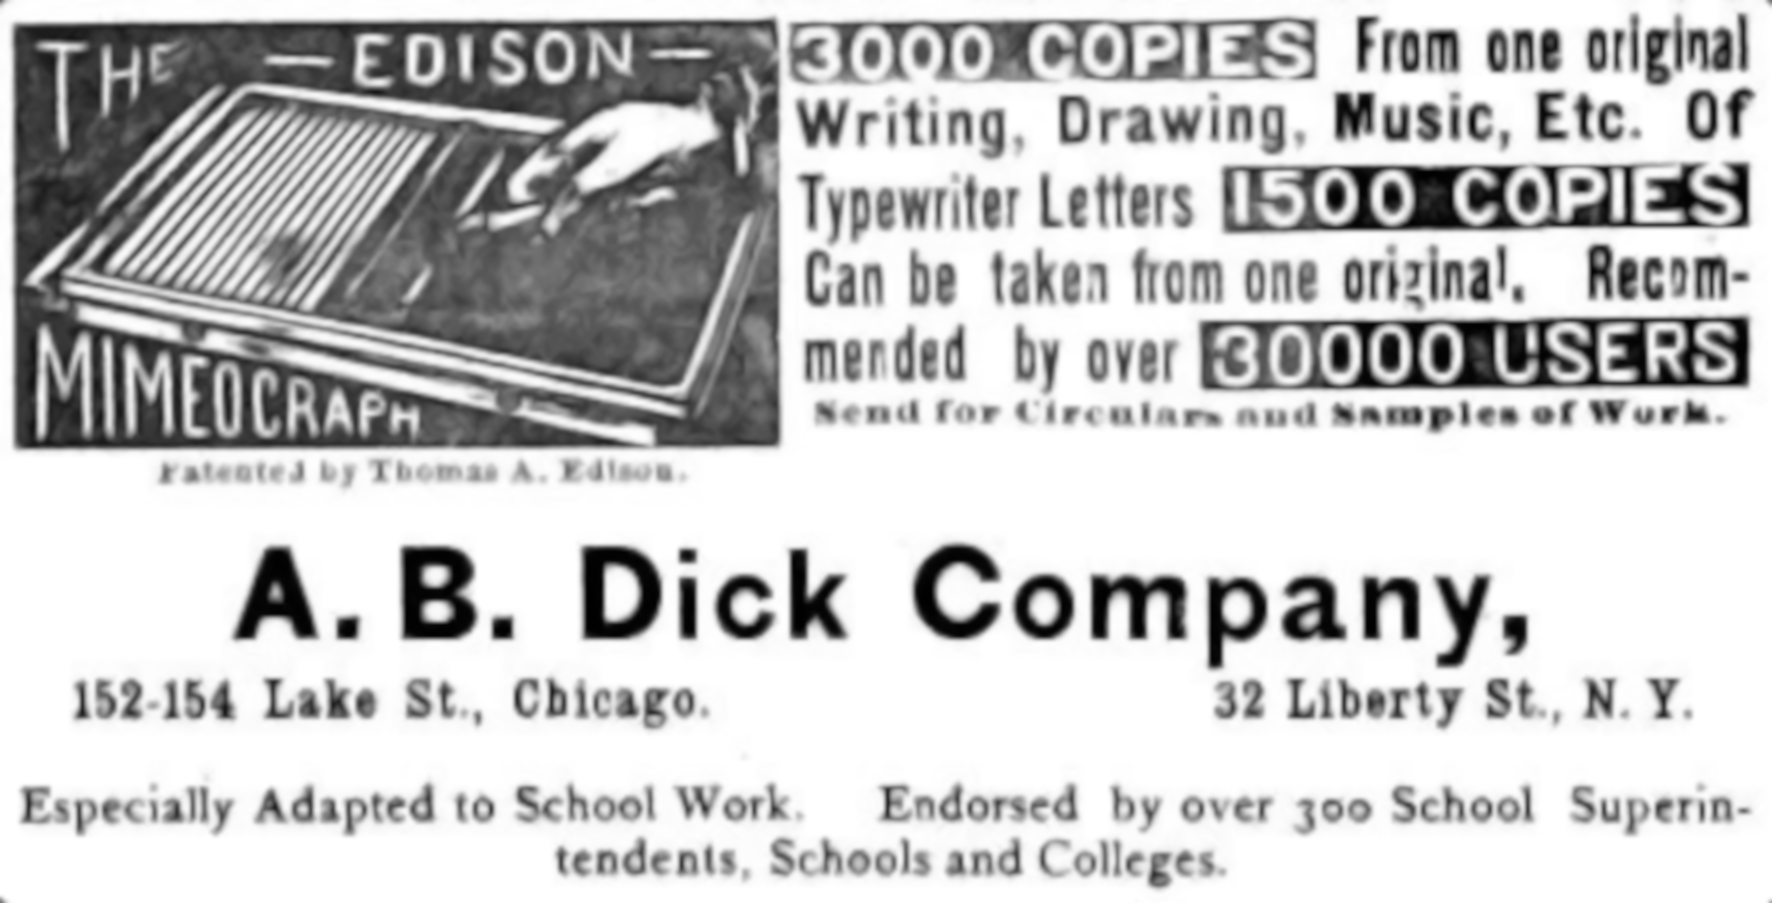 A.B. Dick Company, Werbeschrift spezifiziert, © Eric J. Nordstrom, Urban Remains Location, Chicago